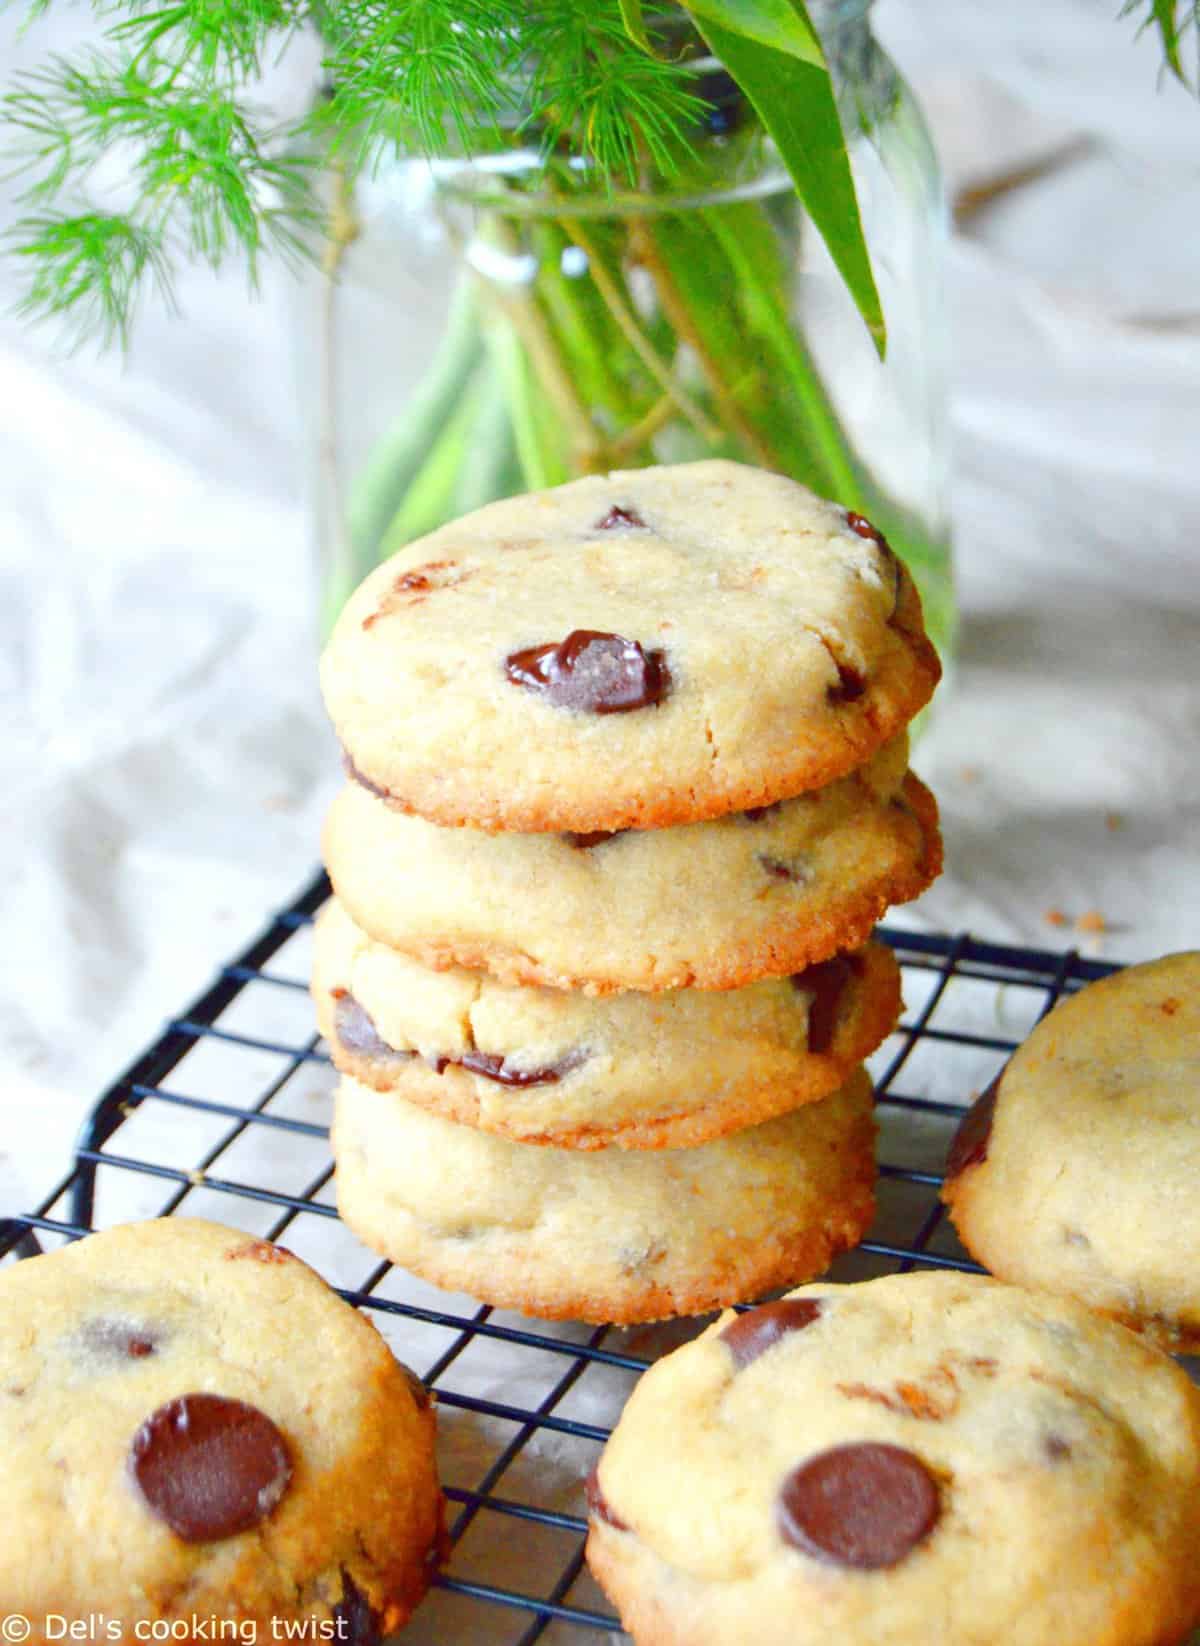 Shortbread Cookies Recipe (No Dough Chilling!) - Sally's Baking